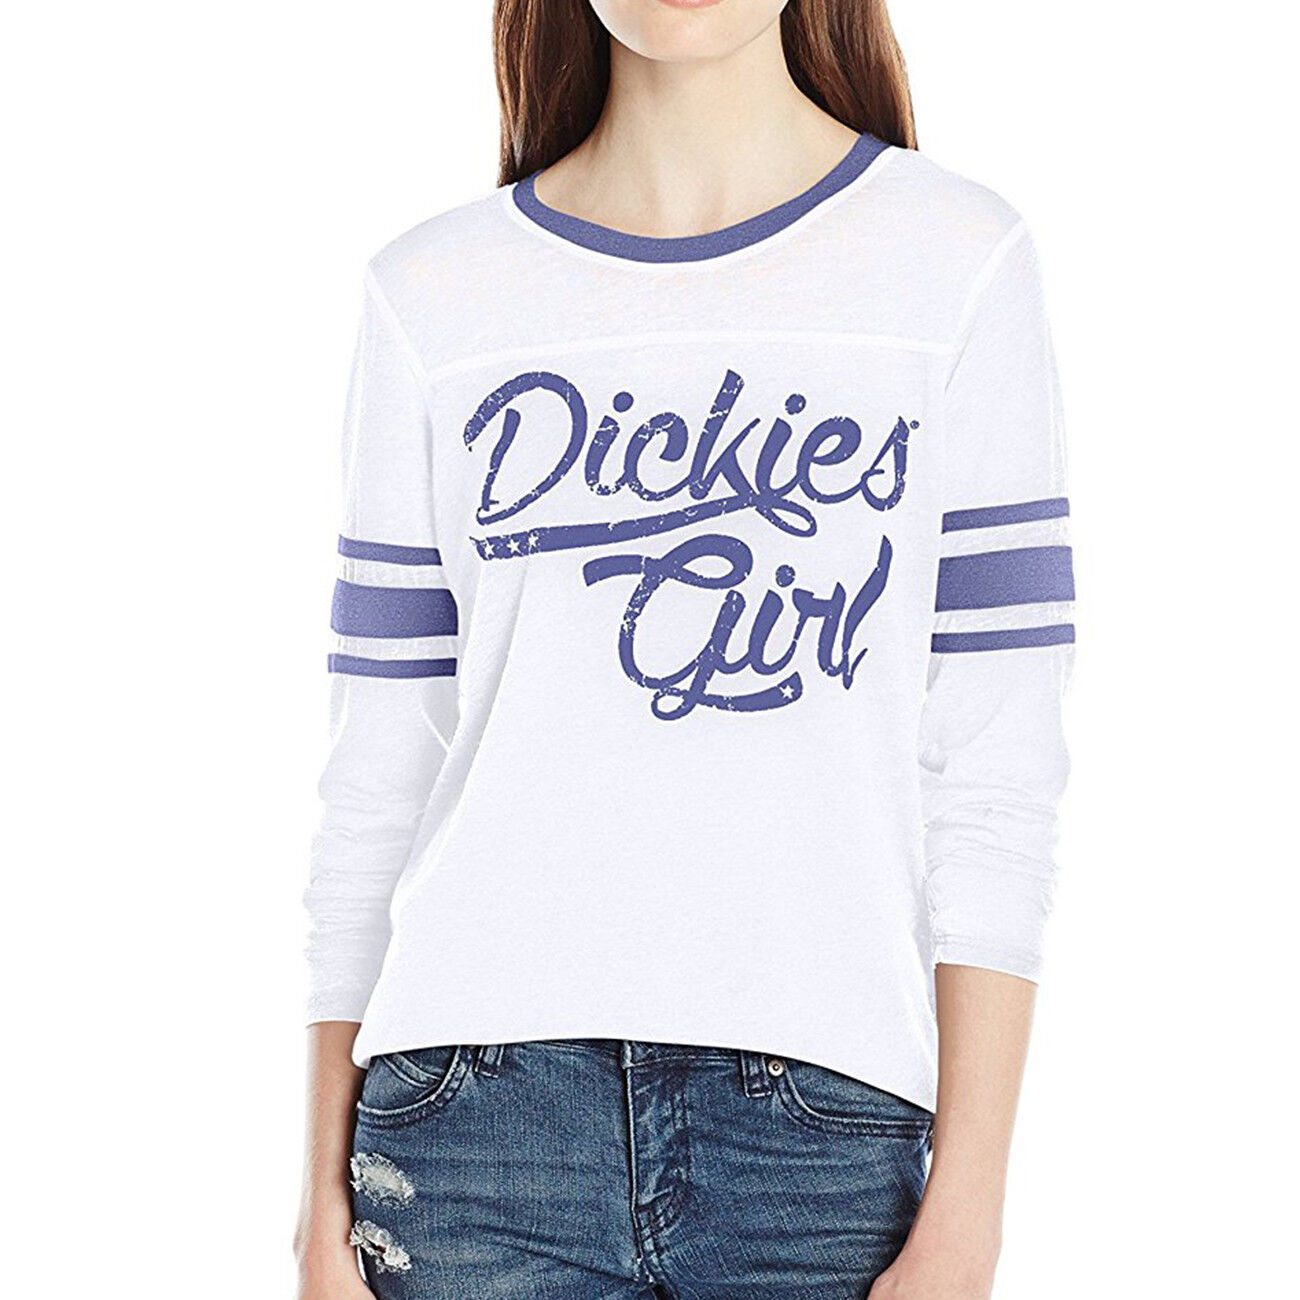 Dickies Girl Varsity Long Sleeve Heather Gray or White Shirt - Womens/Junior Girl